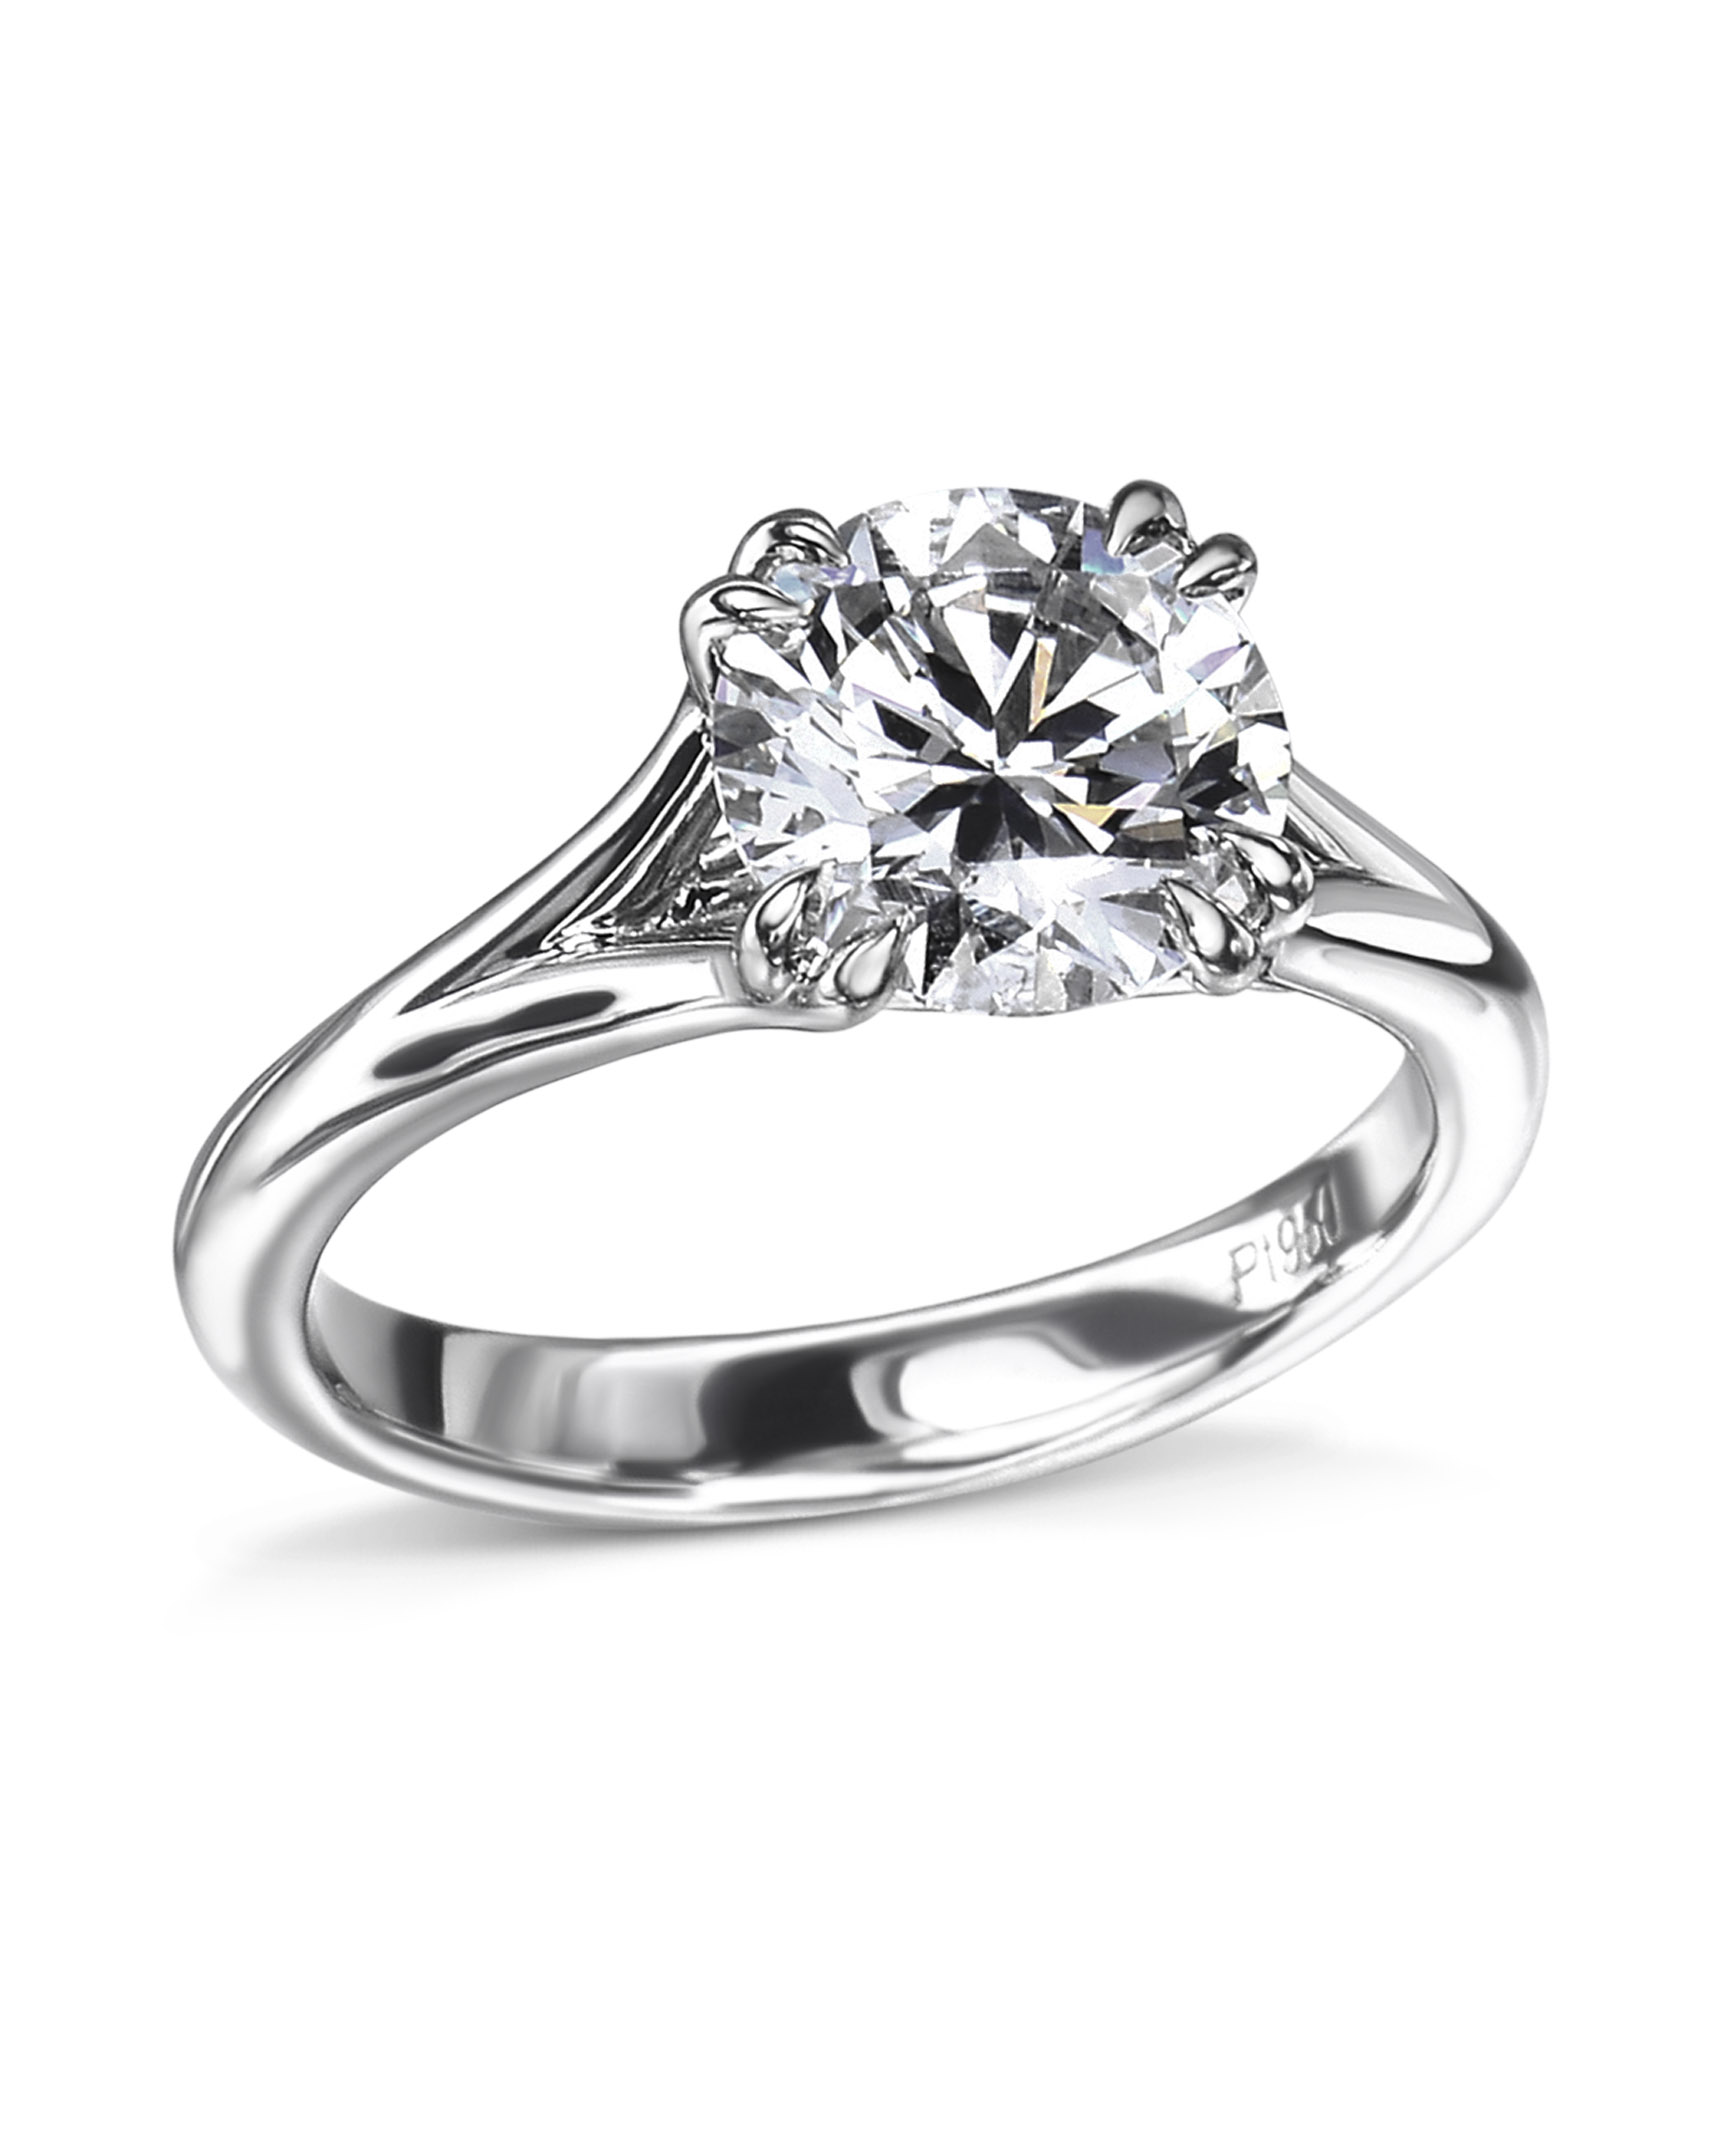 Buy Platinum Couple Rings With Single Diamond Ring for Men & Half Eternity  Ring for Women JL PT 908 Online in India - Etsy